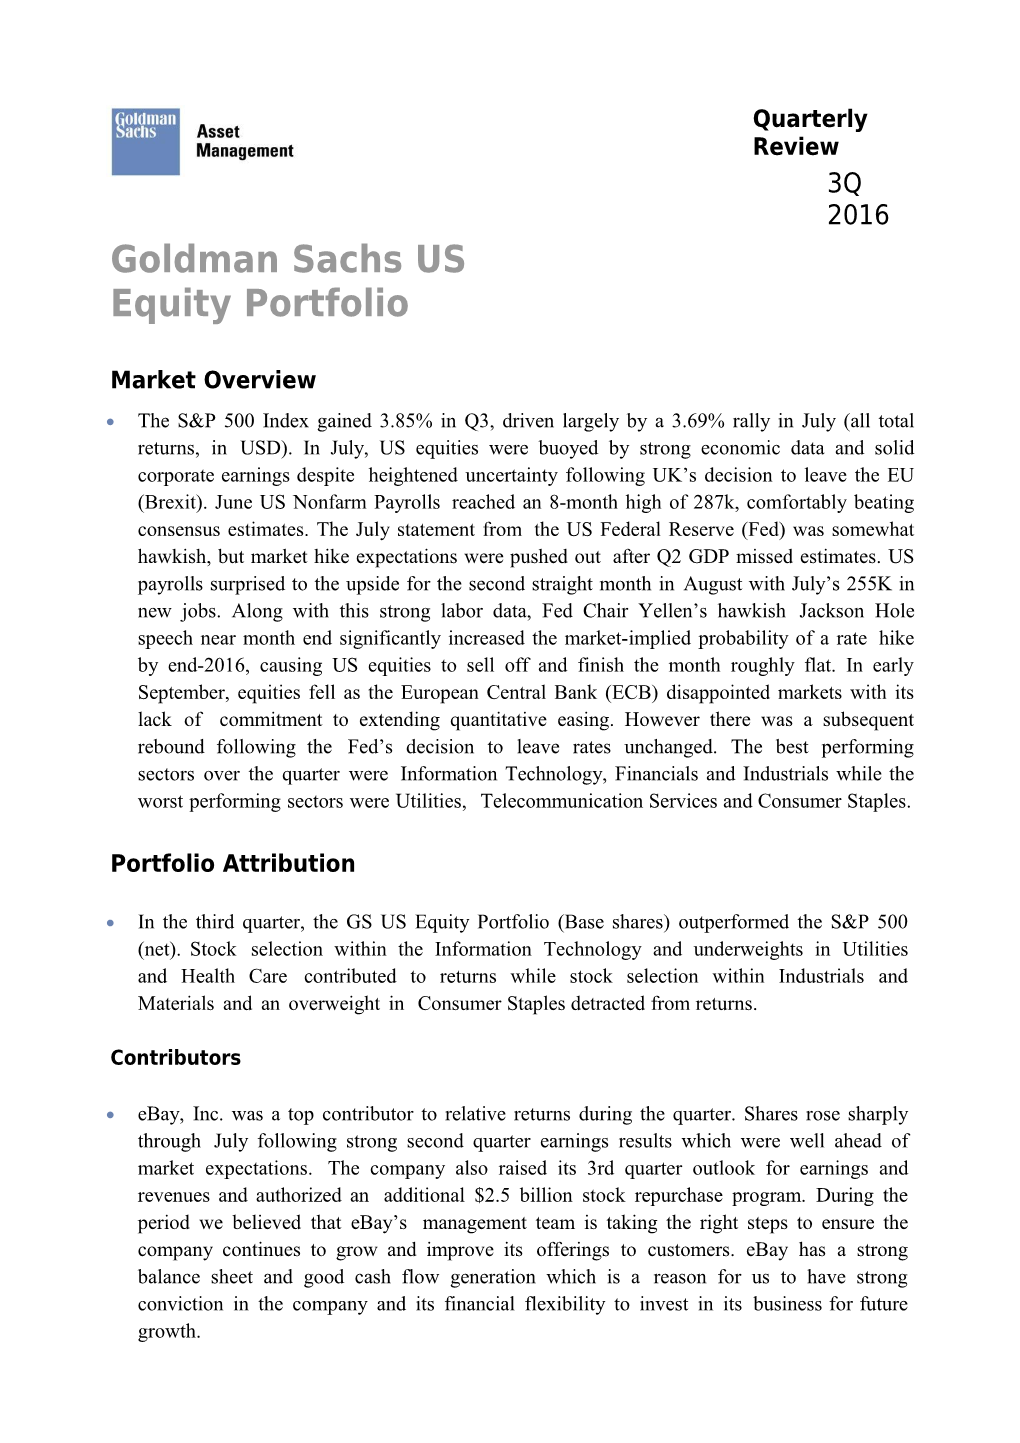 Goldman Sachs US Equity Portfolio